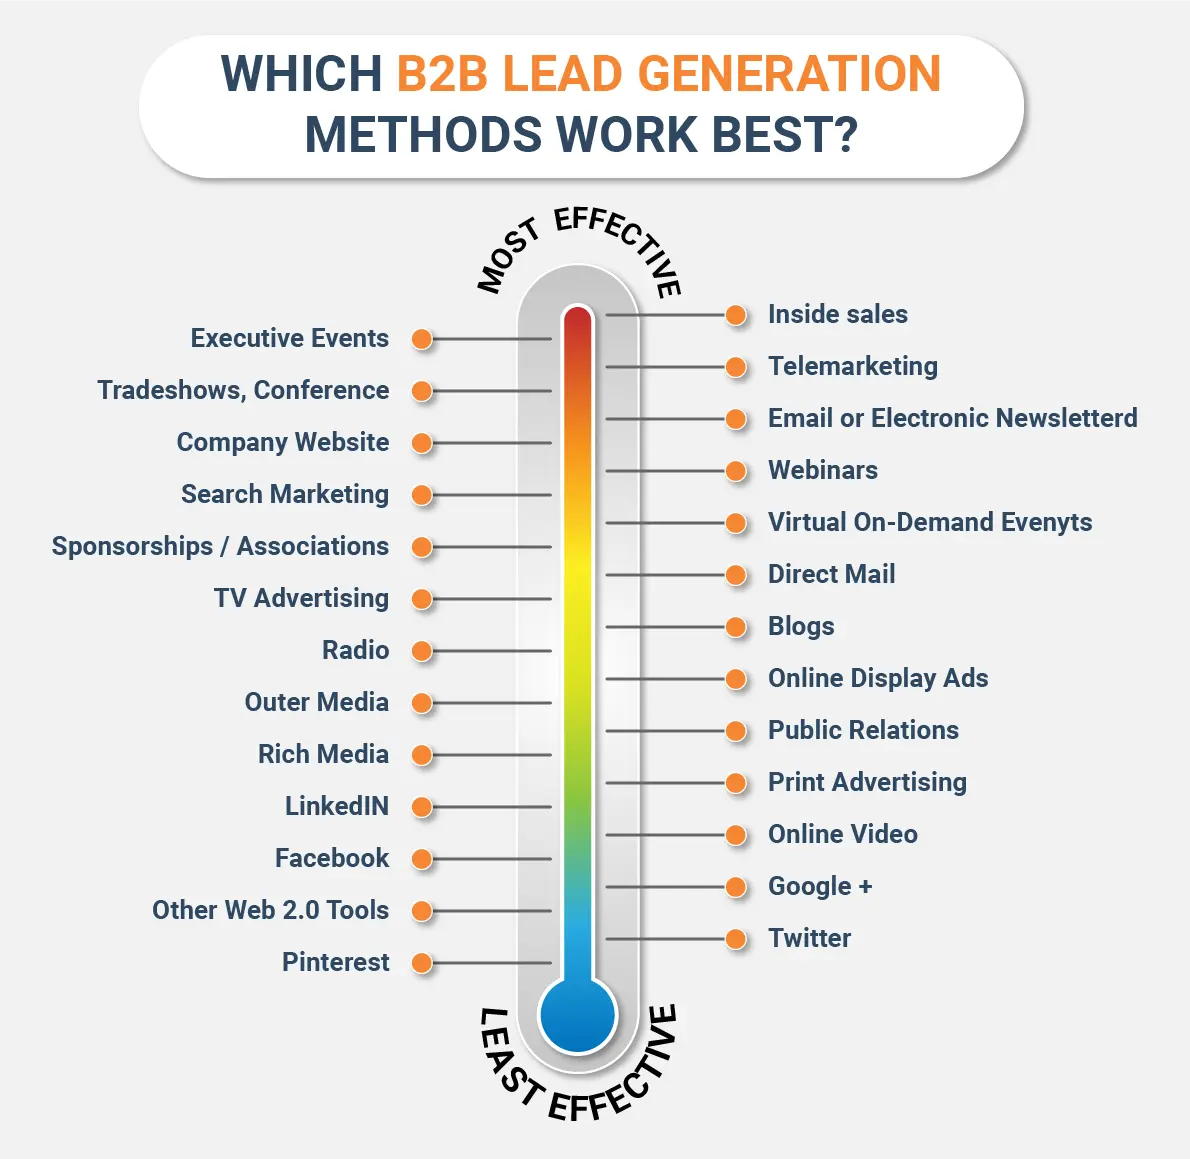 B2B lead generation methods